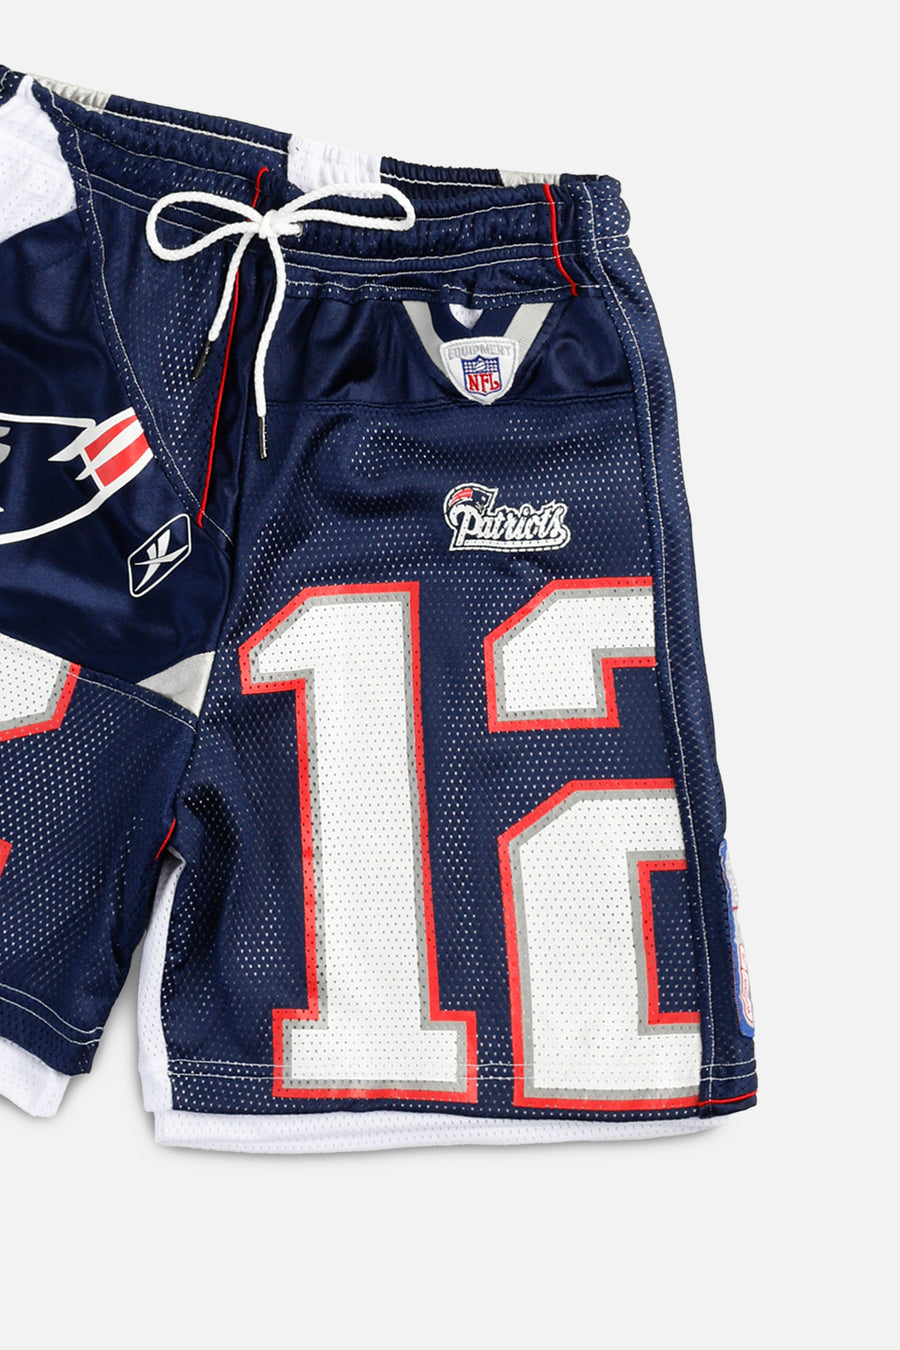 Unisex Rework New England Patriots NFL Jersey Shorts - S